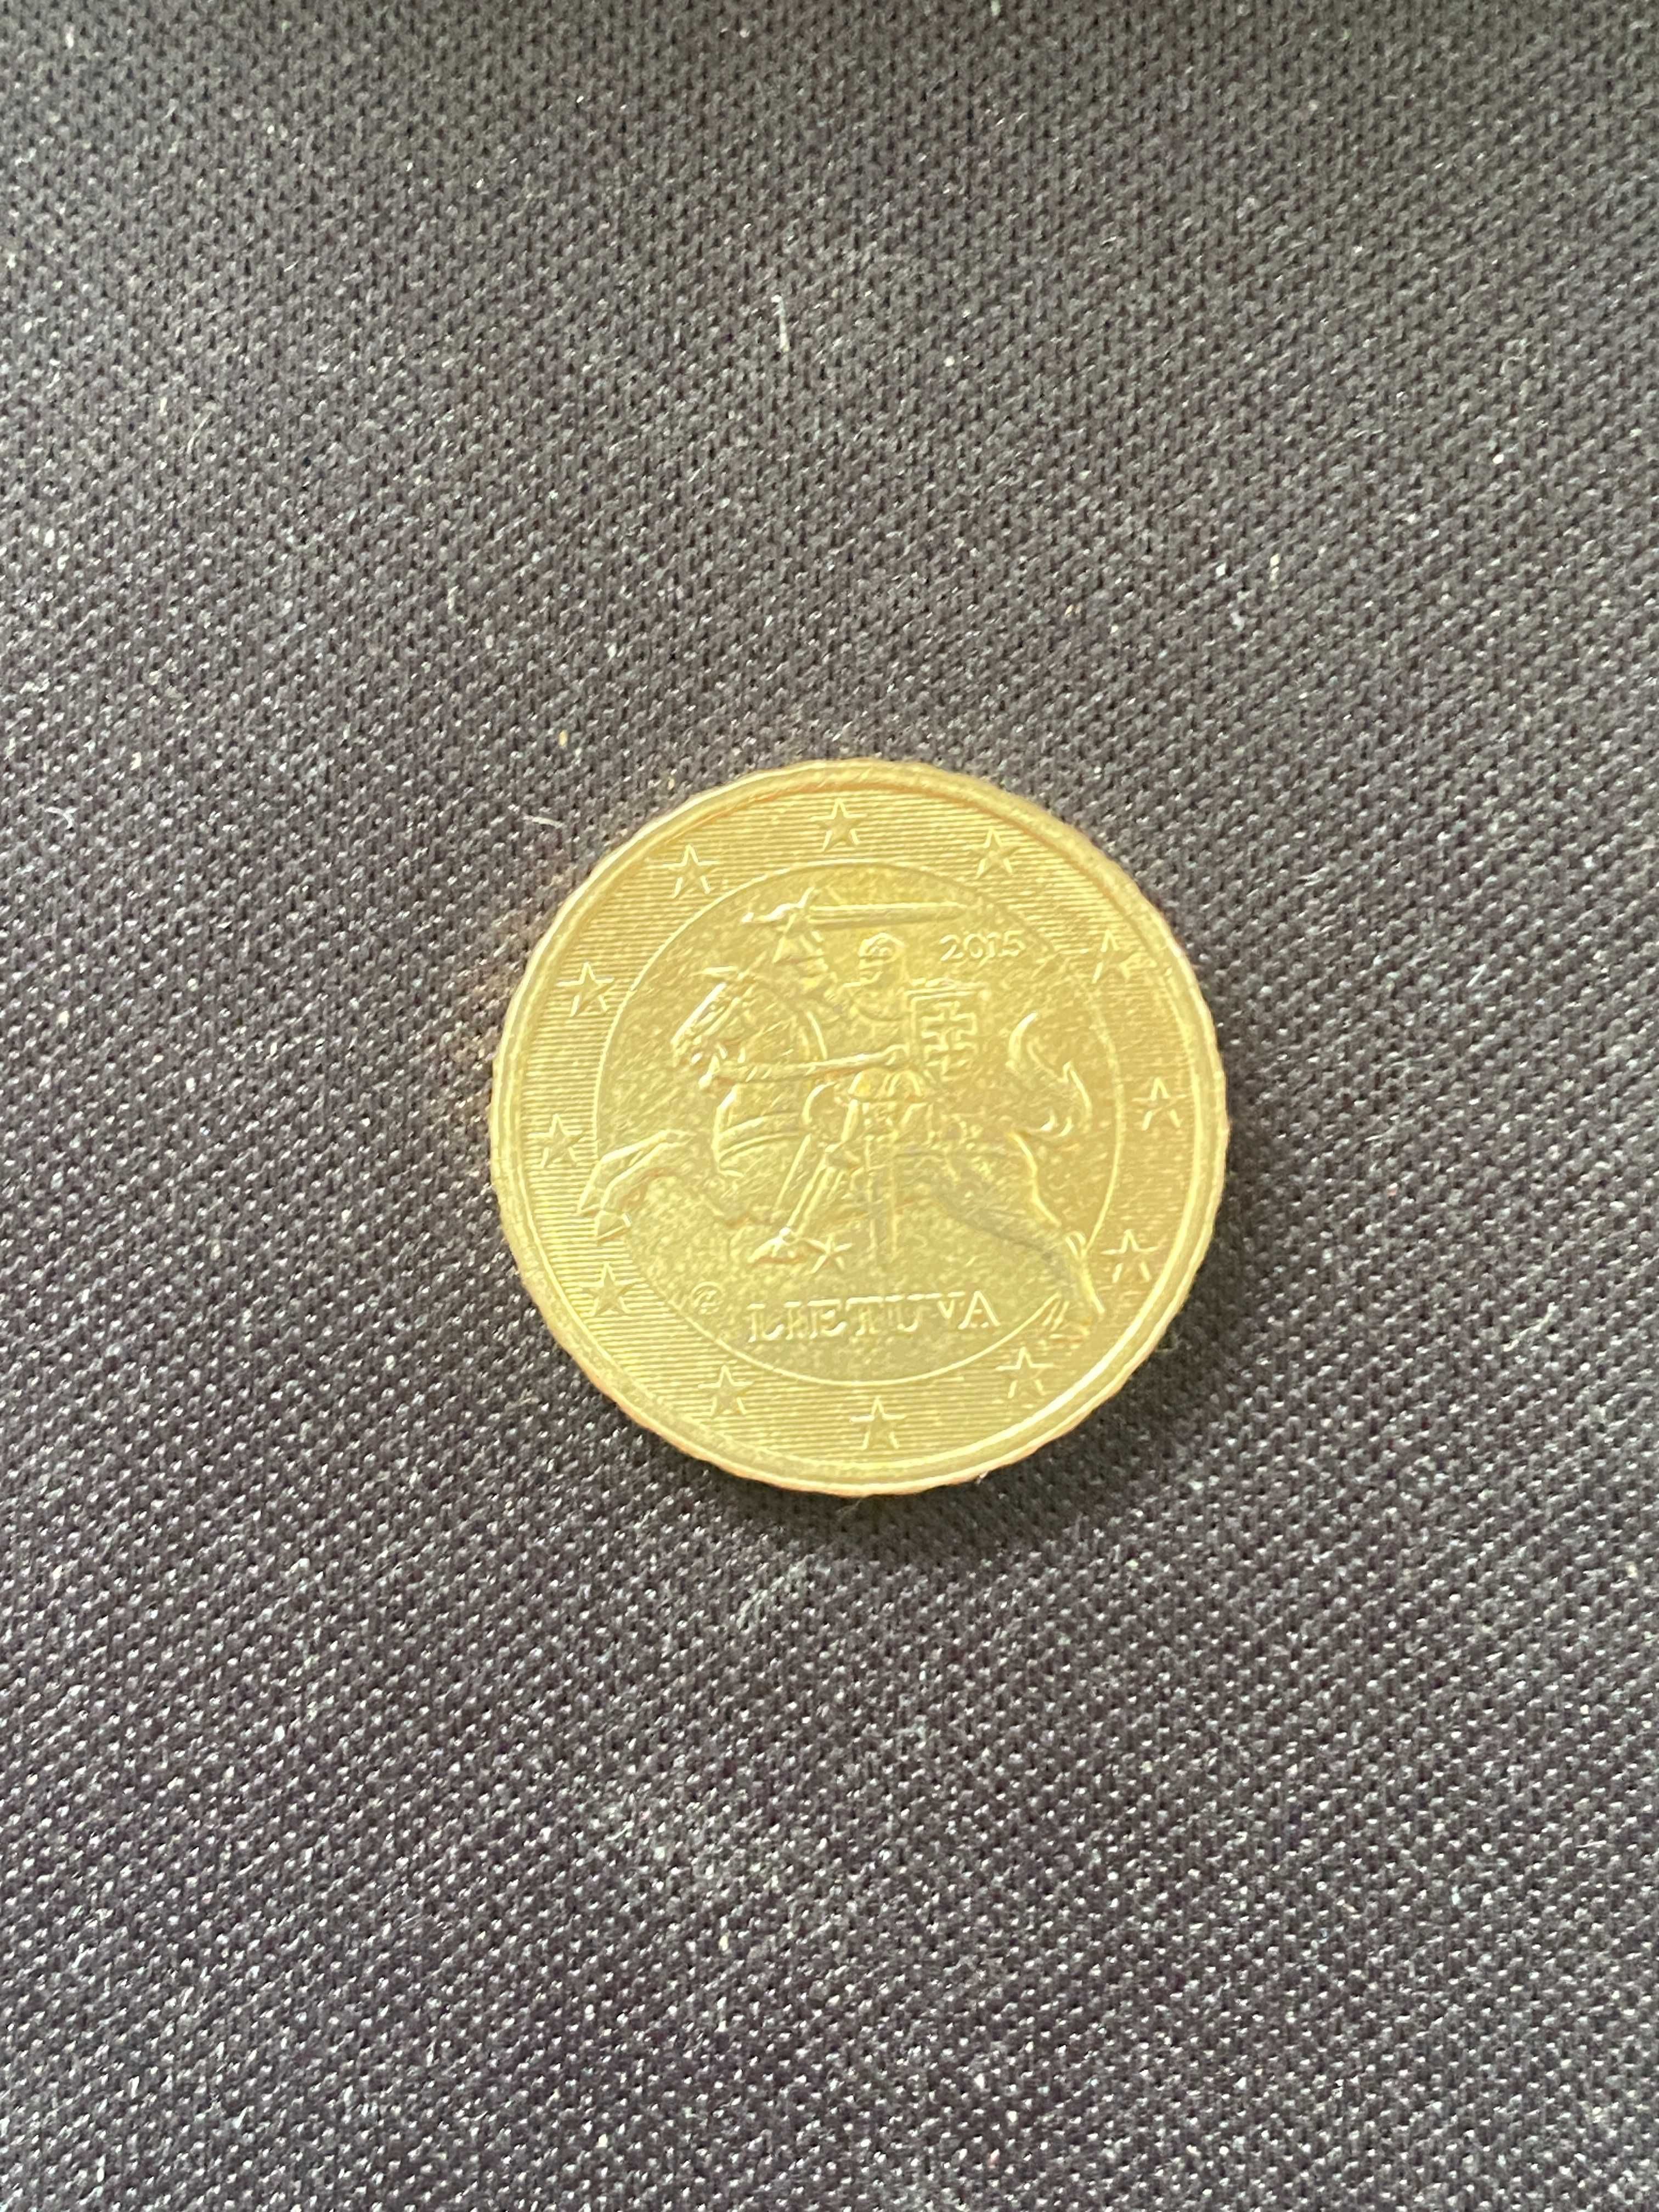 Moneta Litwa - 10 EURO CENT 2015r